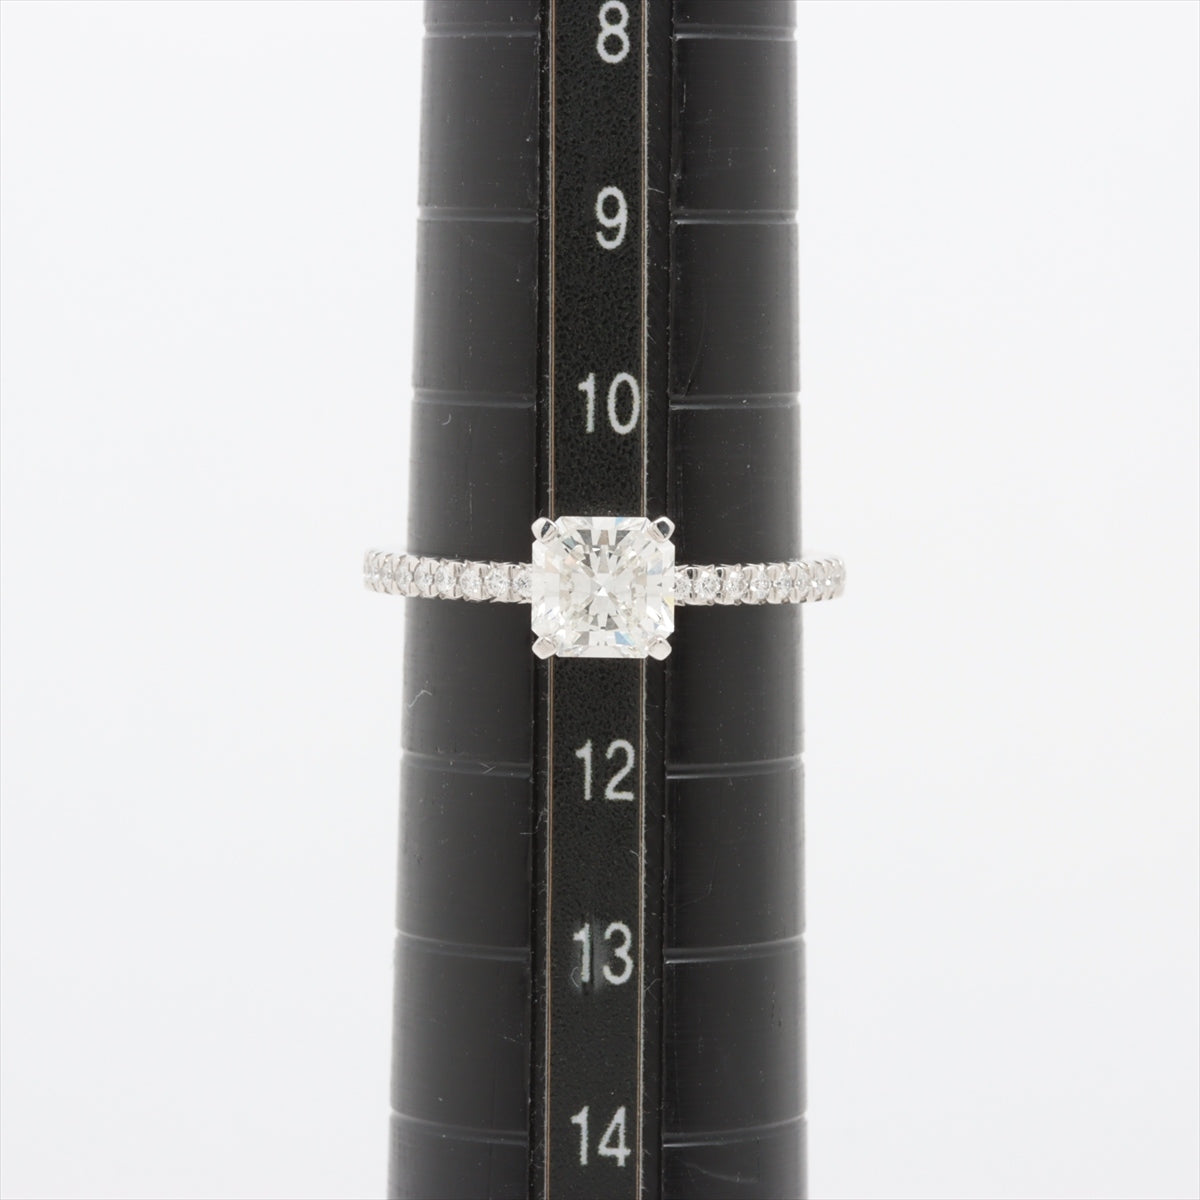 Tiffany TRUE Half Circle diamond rings Pt950 3.8g D0.85 d0.09